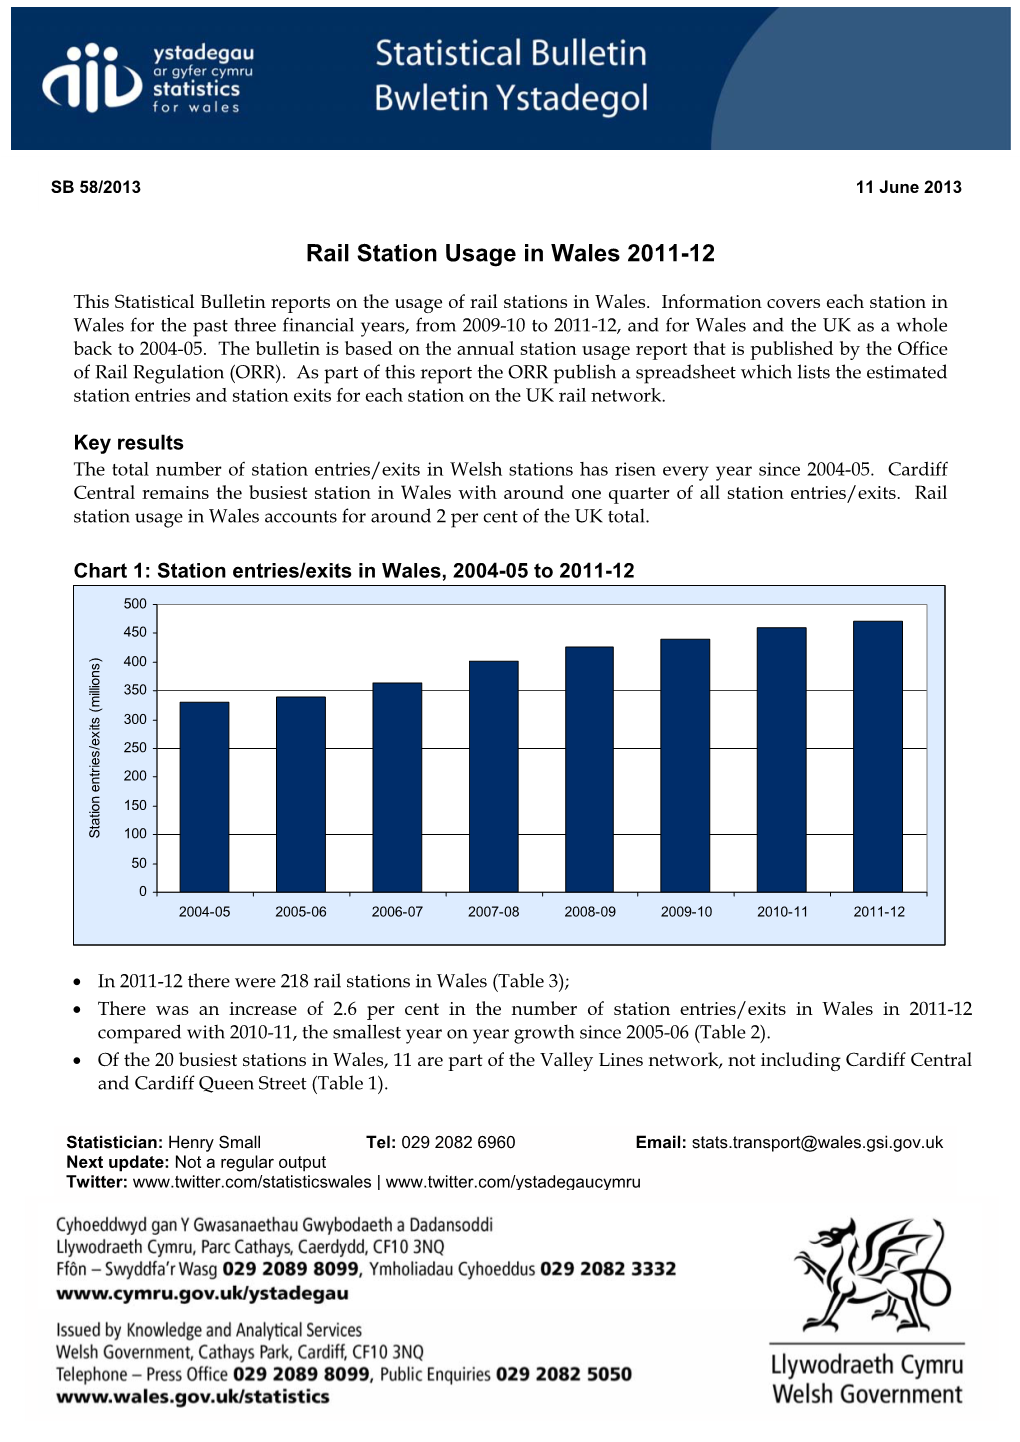 SB 58/2013 Rail Station Usage in Wales 2011-12